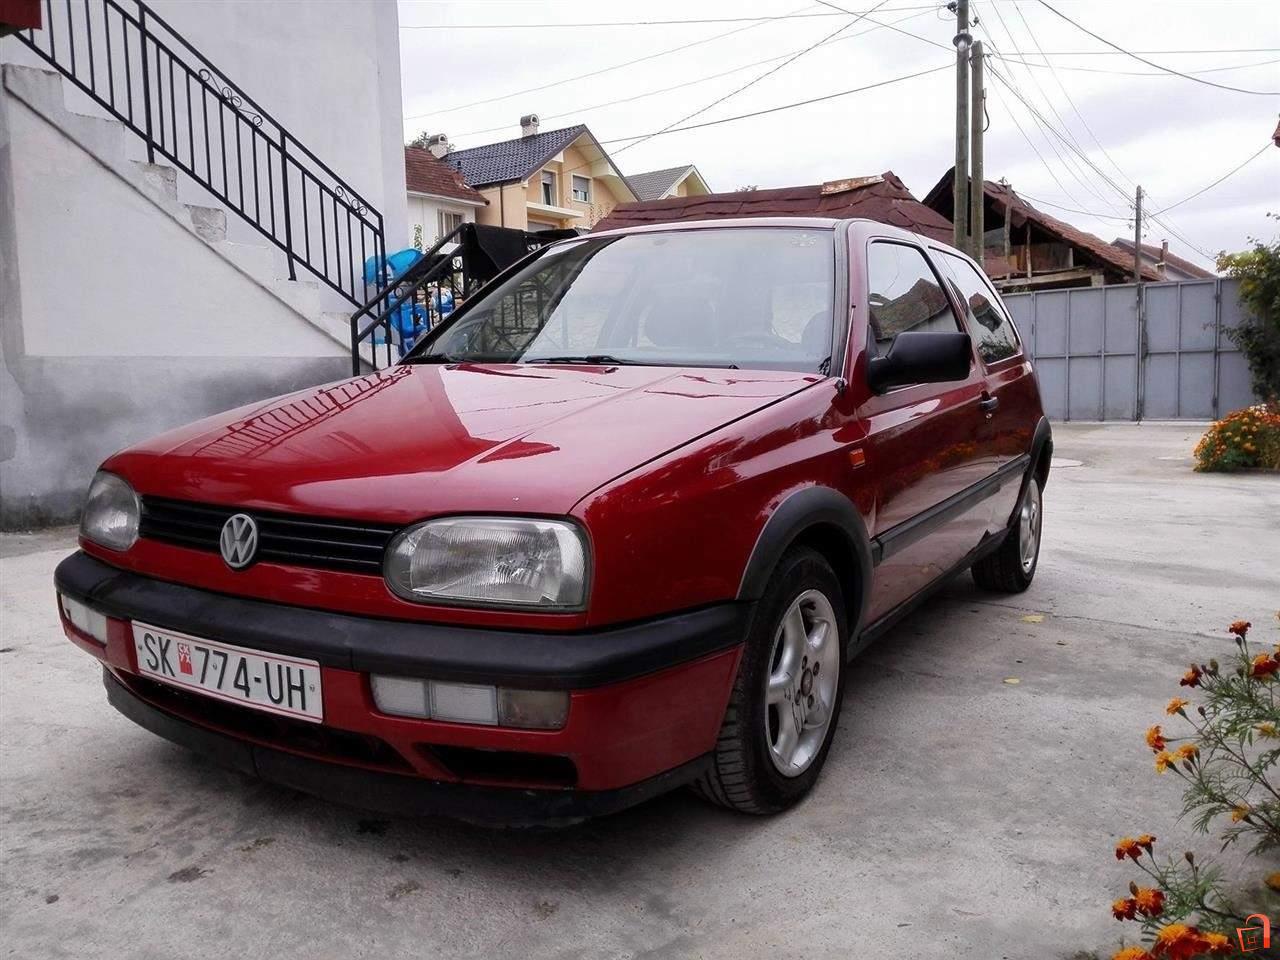 VW Golf 3 96 dizel vo odlicna sostojba Skopje